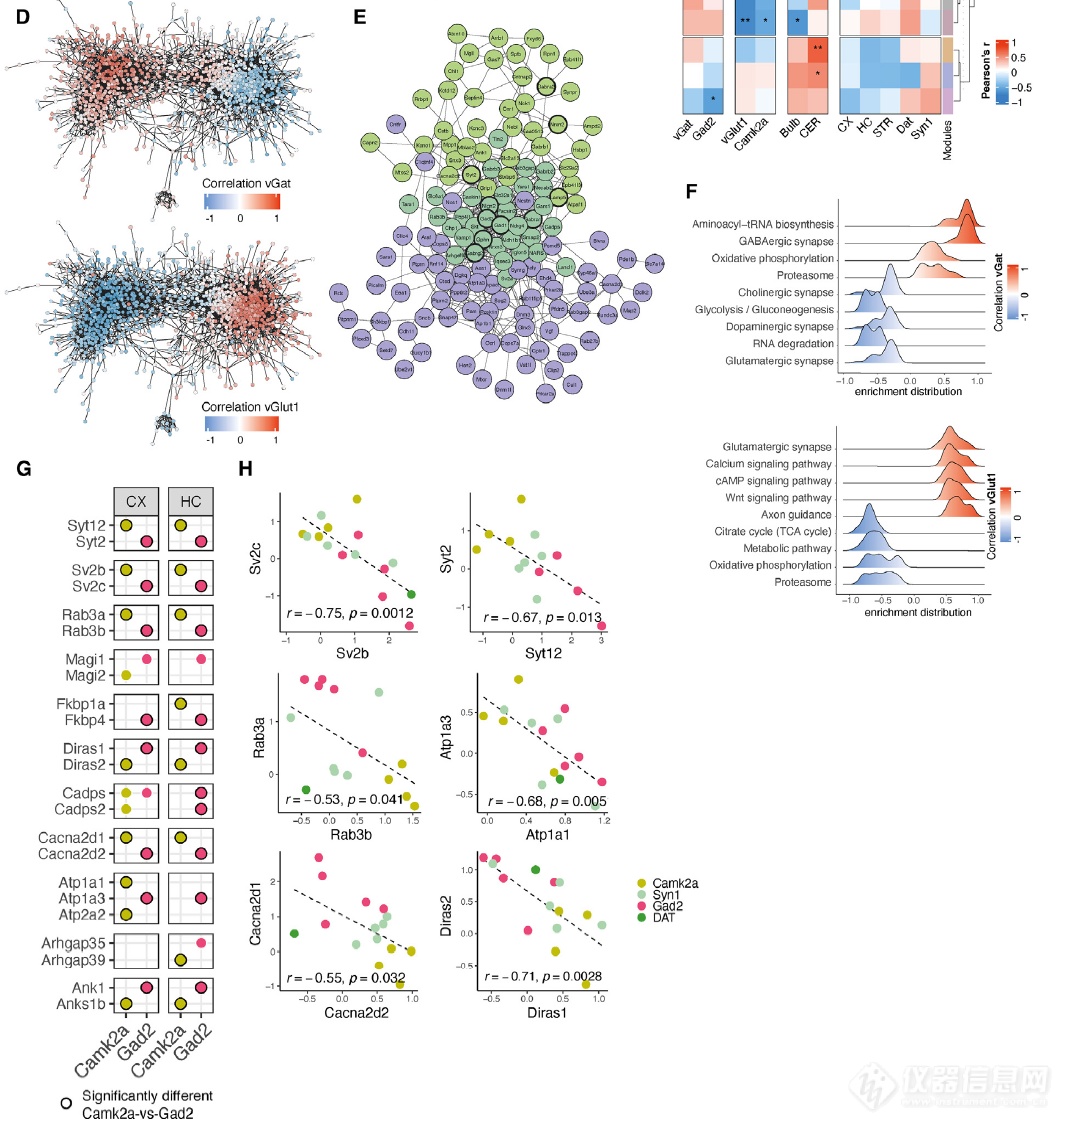 Cell重磅| Azure Sapphire助力揭示突触多样性的蛋白图谱